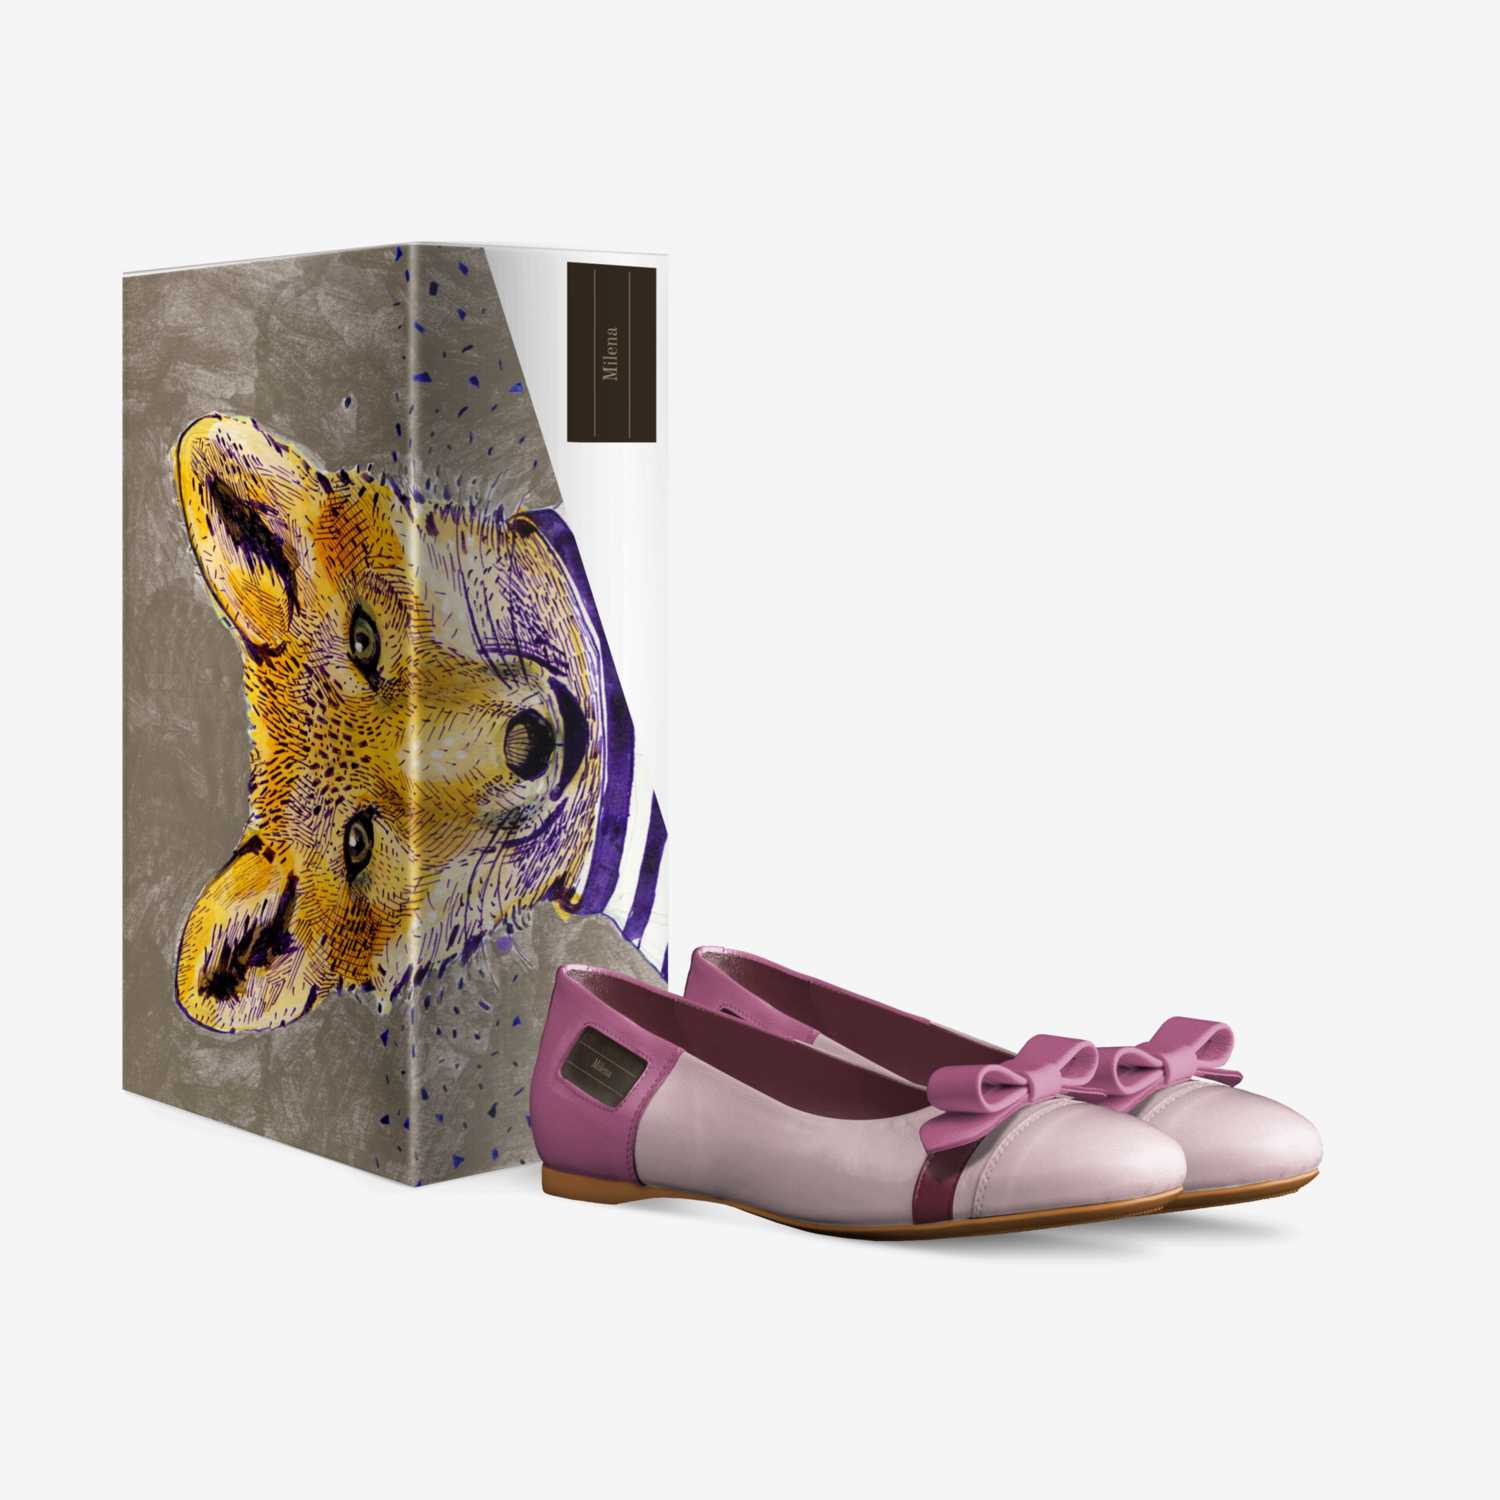 Milena custom made in Italy shoes by Milena Hrebacka | Box view